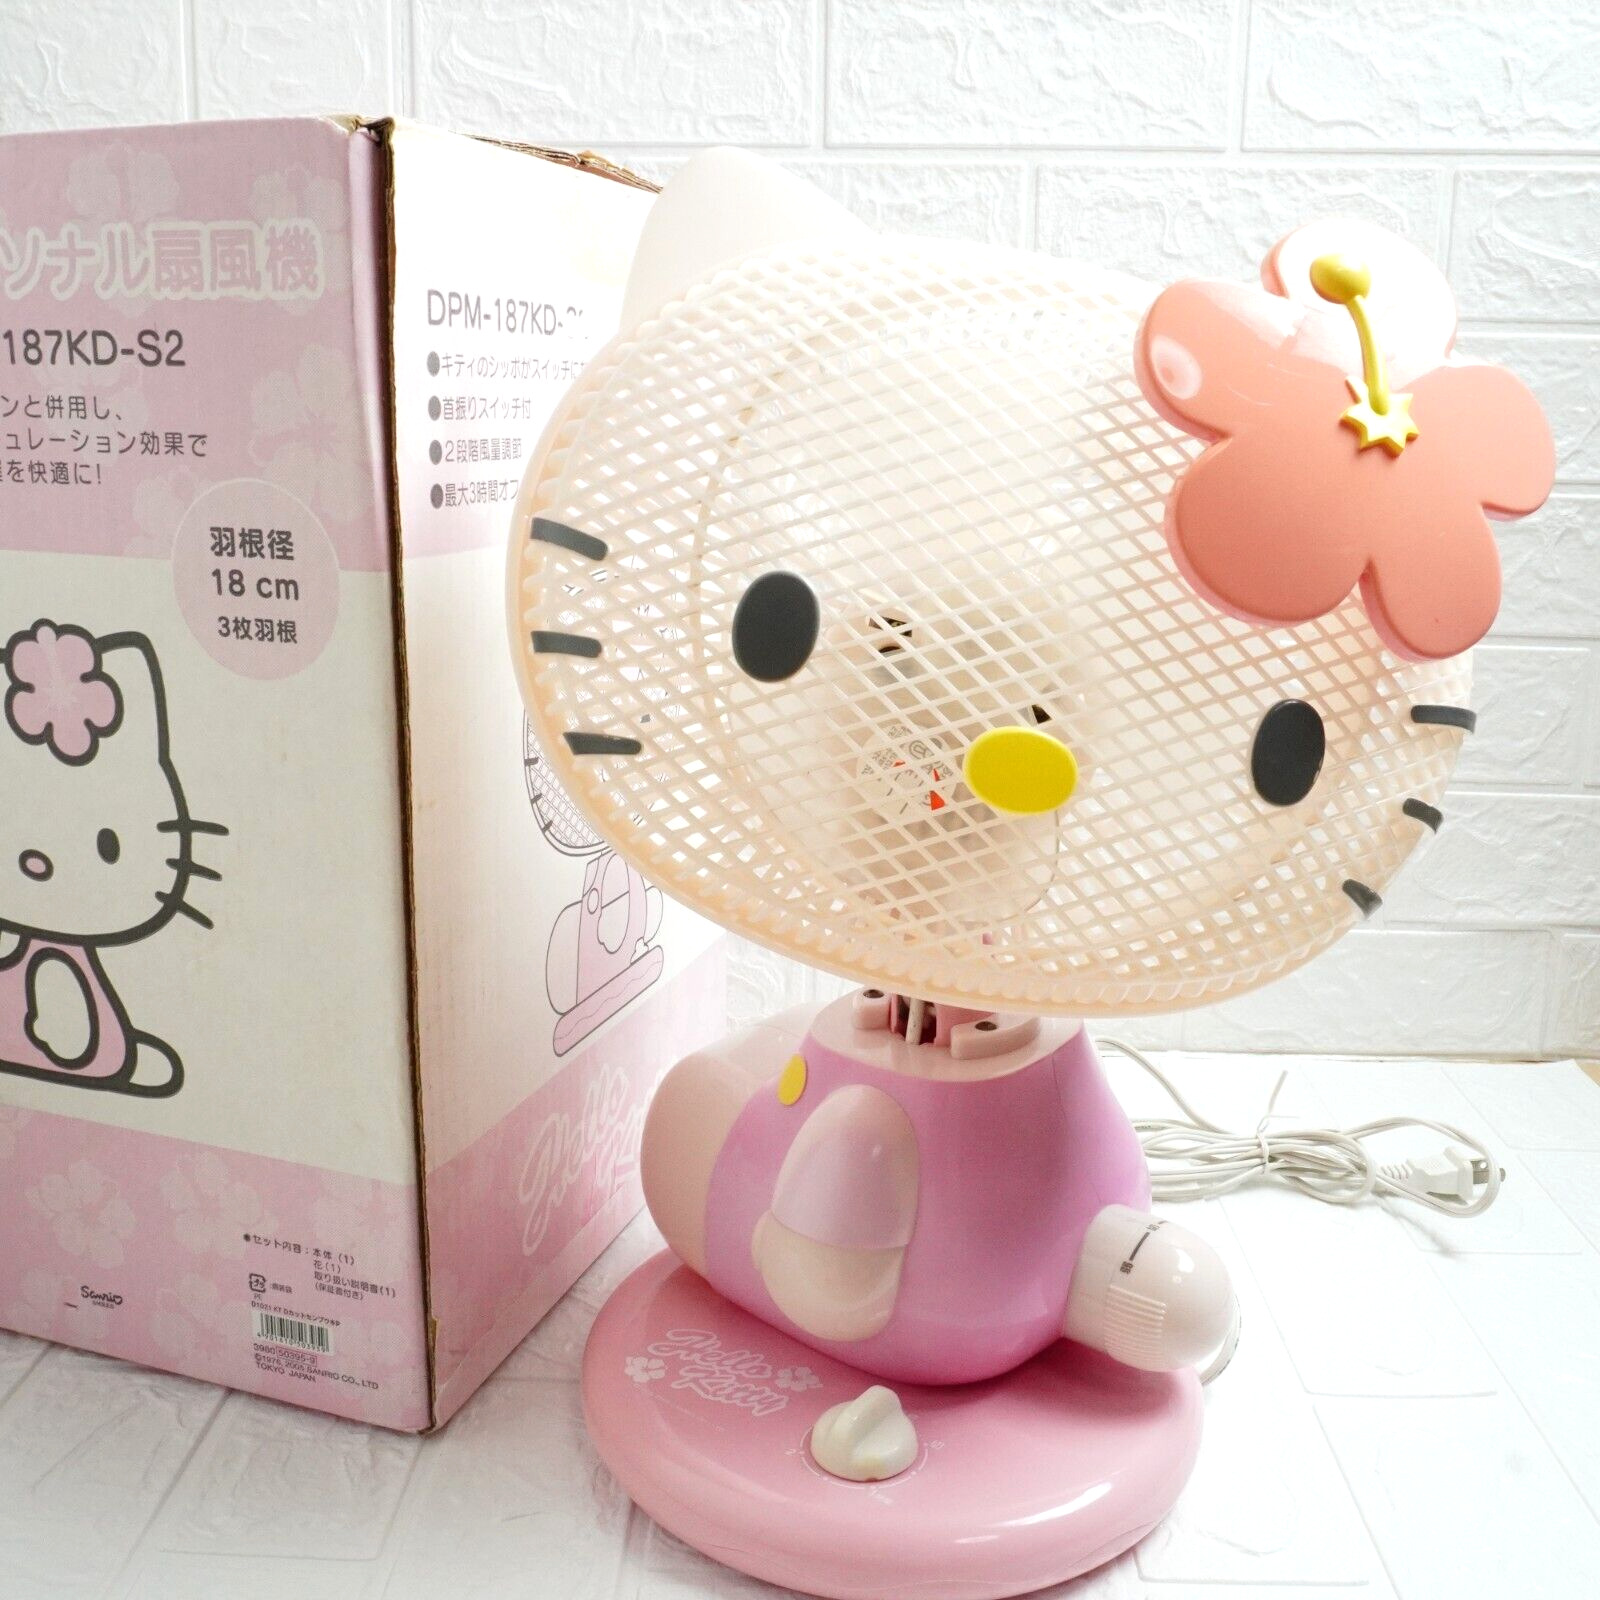 Sanrio Hello Kitty Electric Fan Desk Table Small Pink hibiscus 2005 100v w/ Box